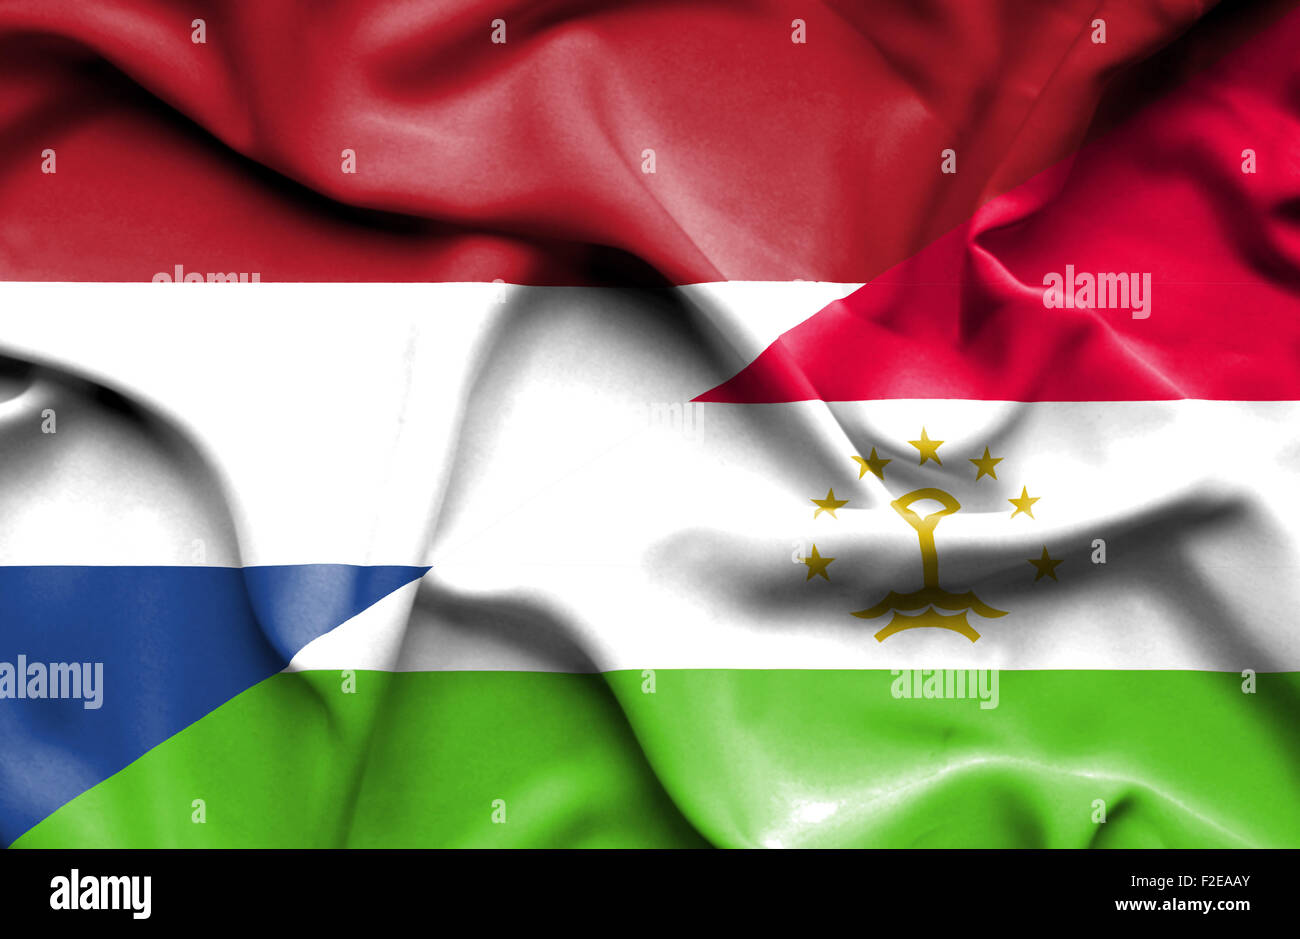 Waving flag of Tajikistan and Stock Photo